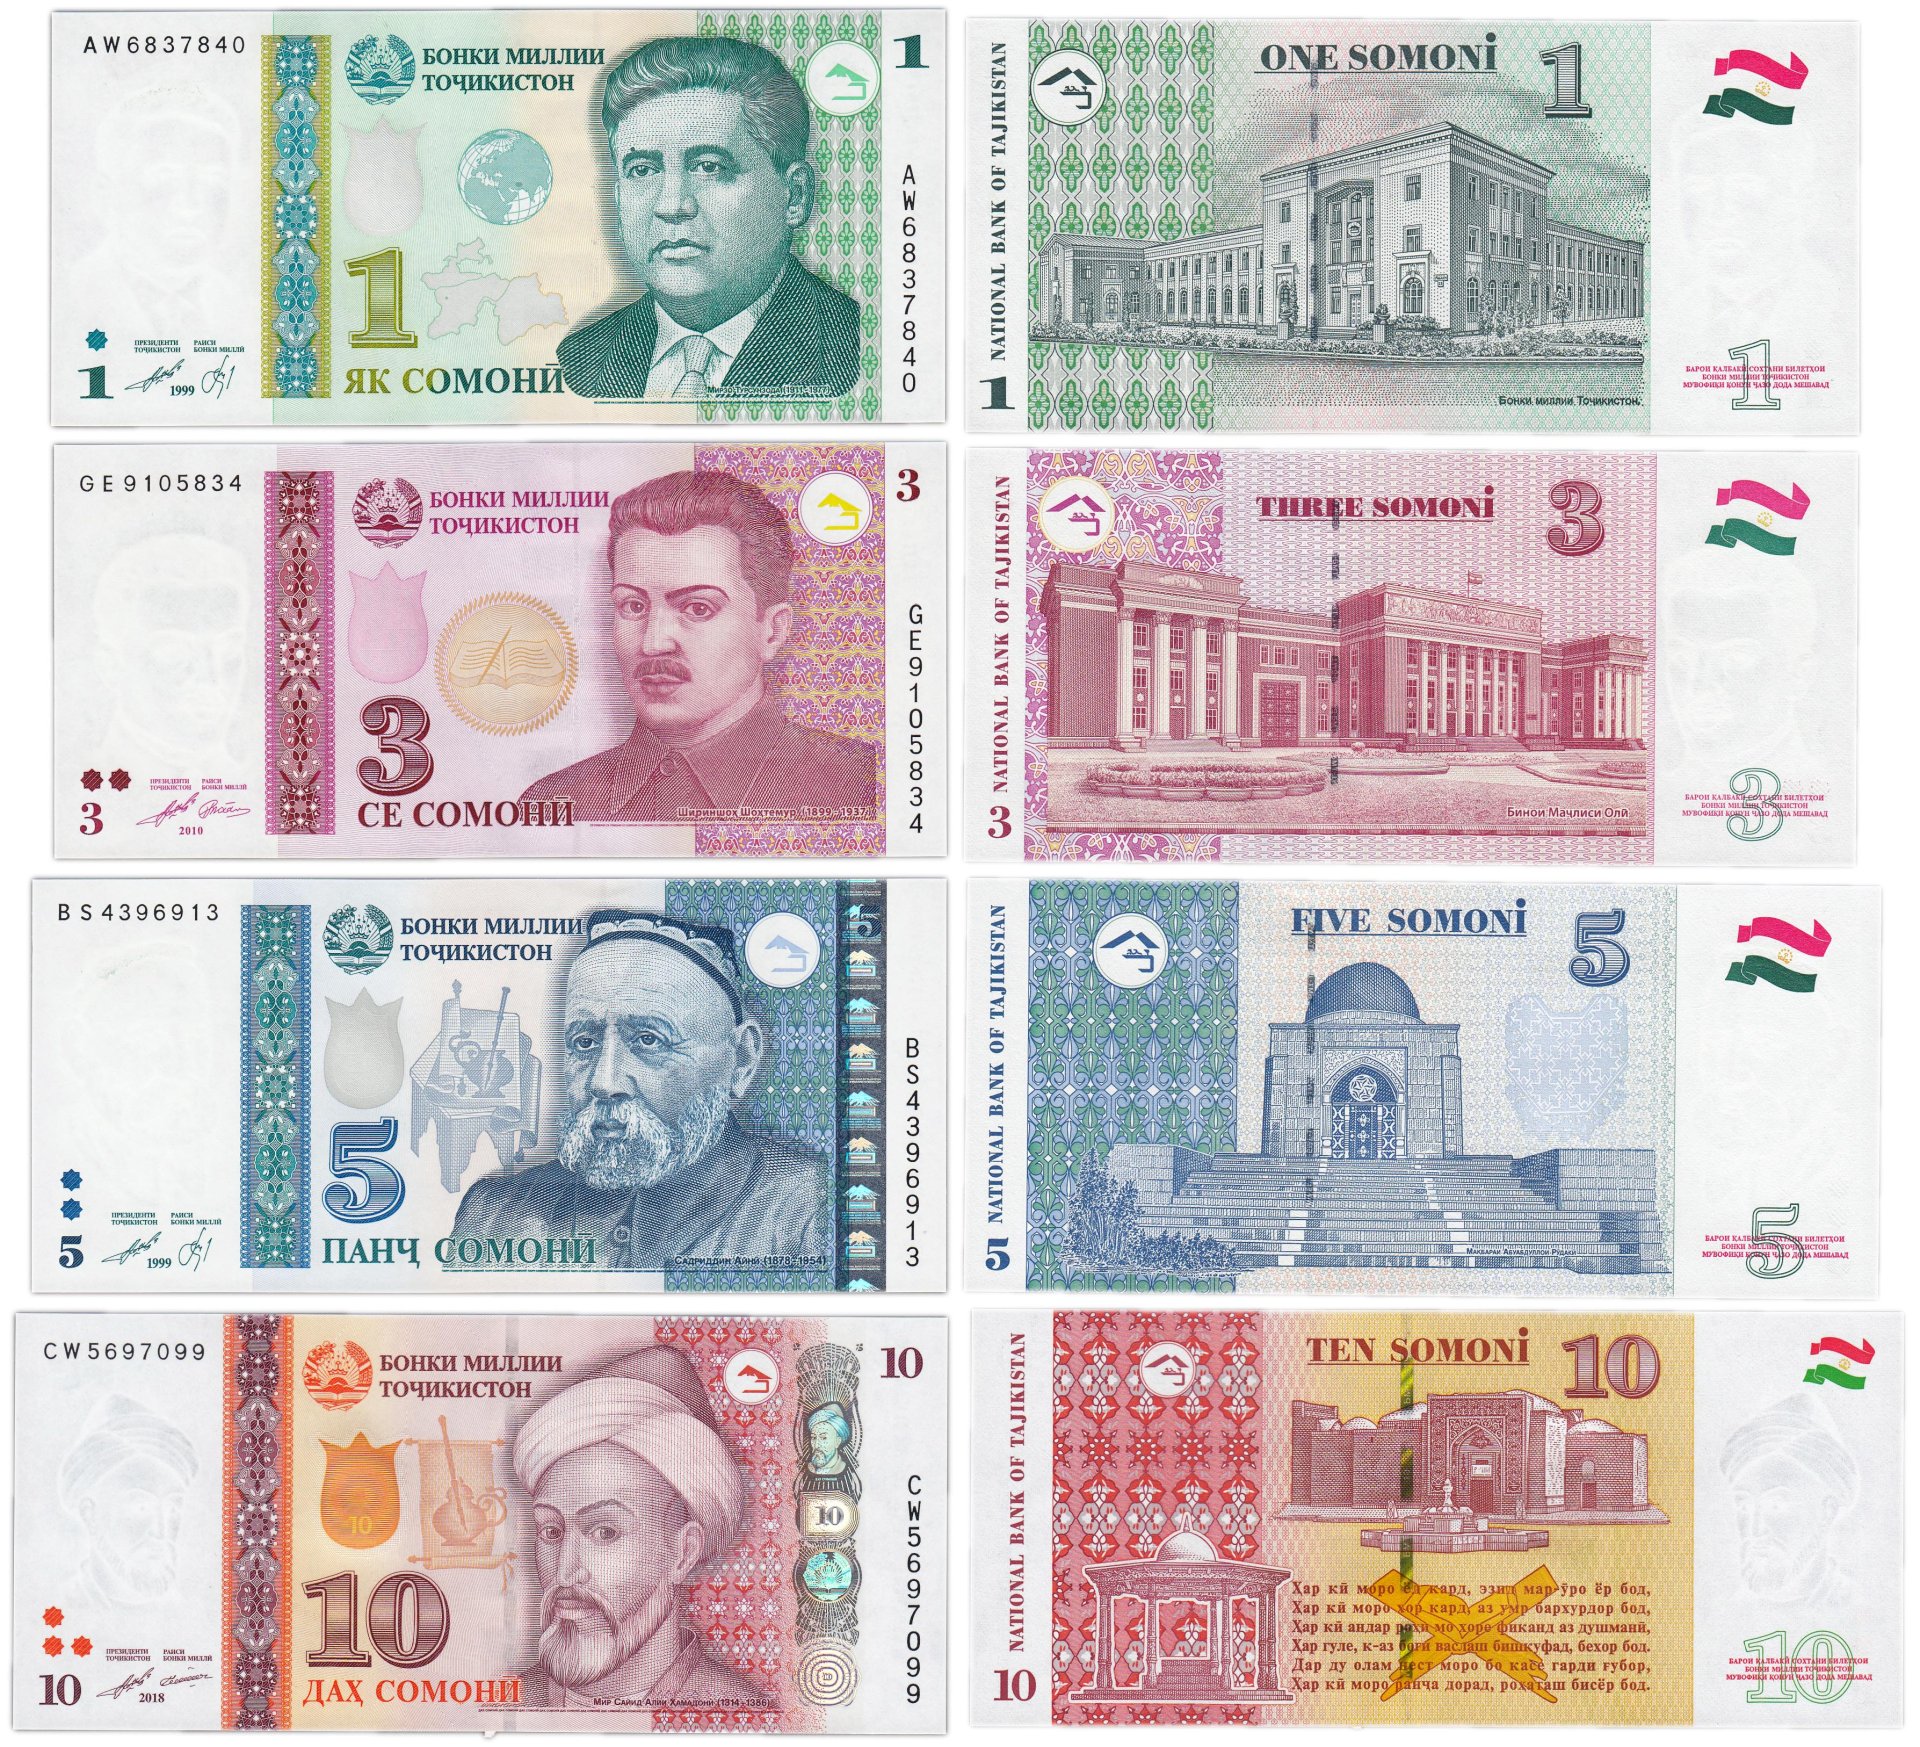 Национальная валюта таджикистана. 1 Сомони Таджикистан купюра. Банкноты Сомони 1999 набор. Деньги Таджикистана 100 сомонй. 1 Сомони 1999 Таджикистан.